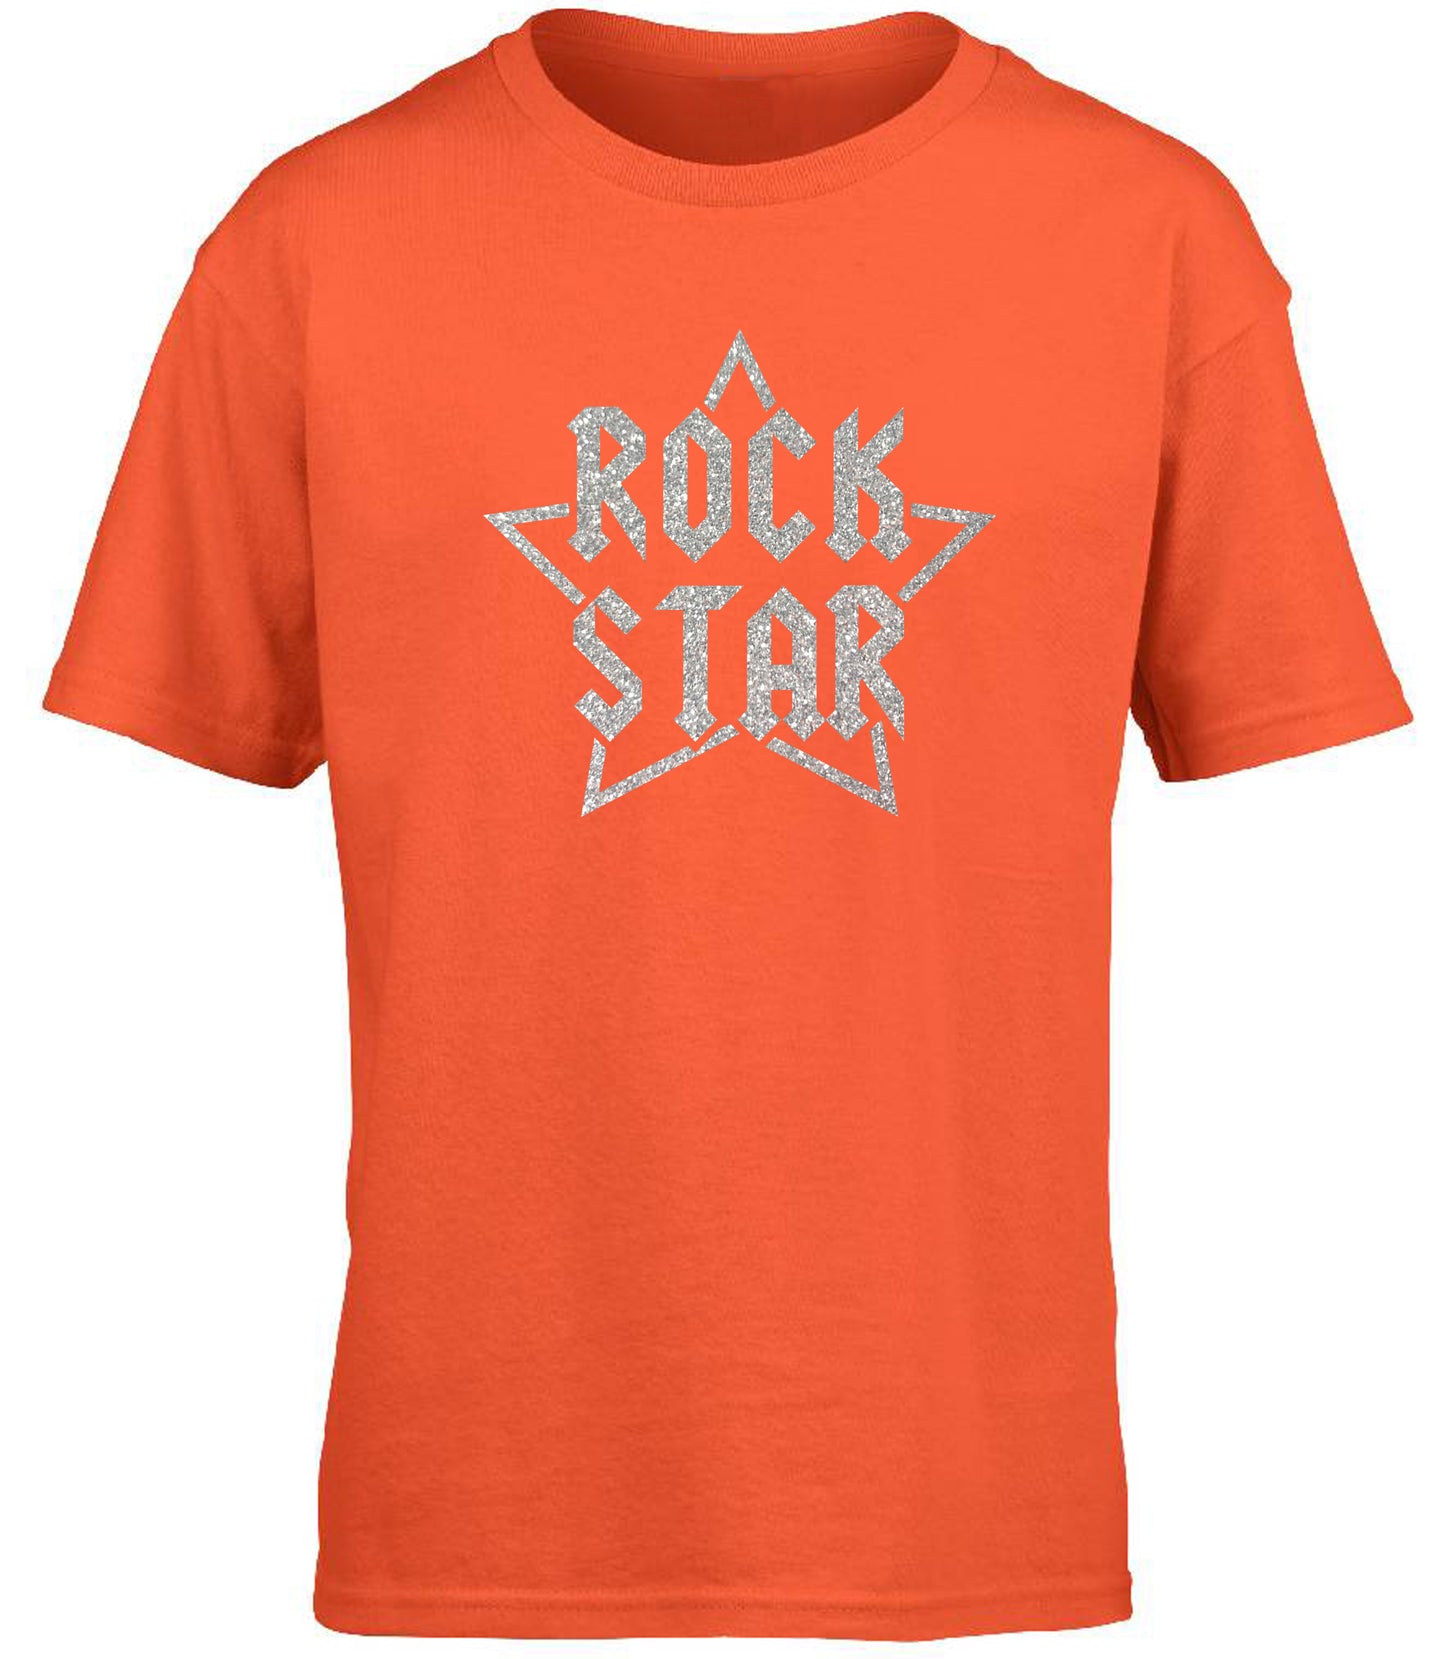 Rock star - Glitter children's T-shirt